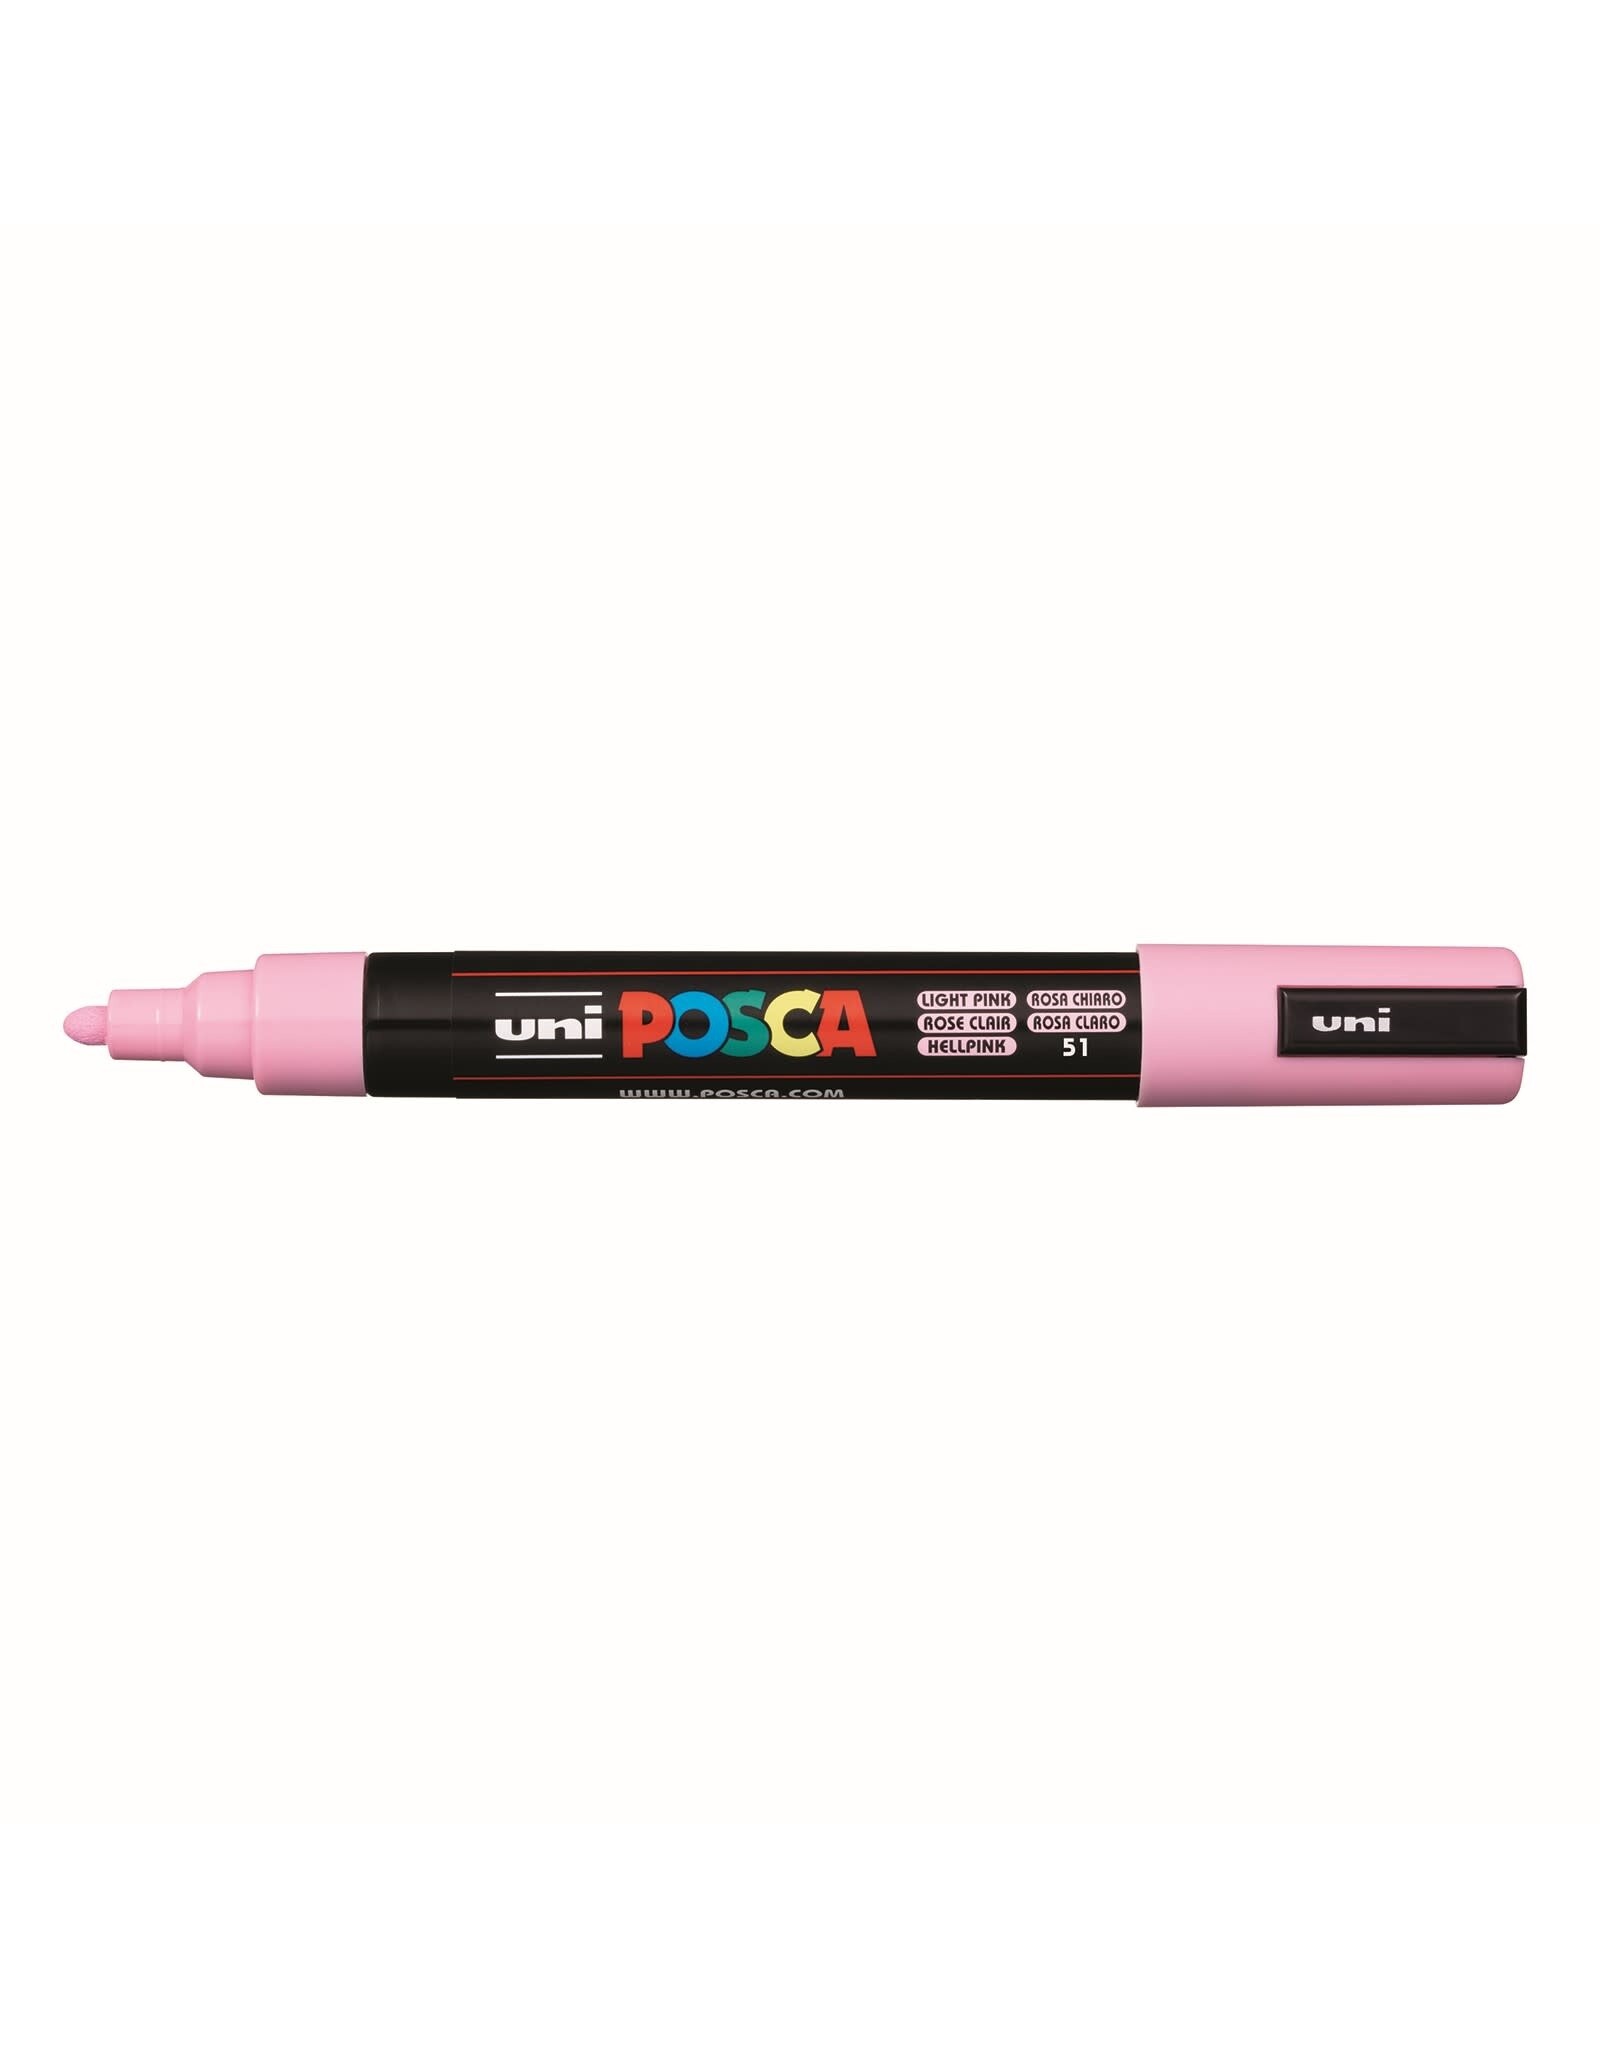 POSCA Uni POSCA Paint Marker, Medium, Light Pink